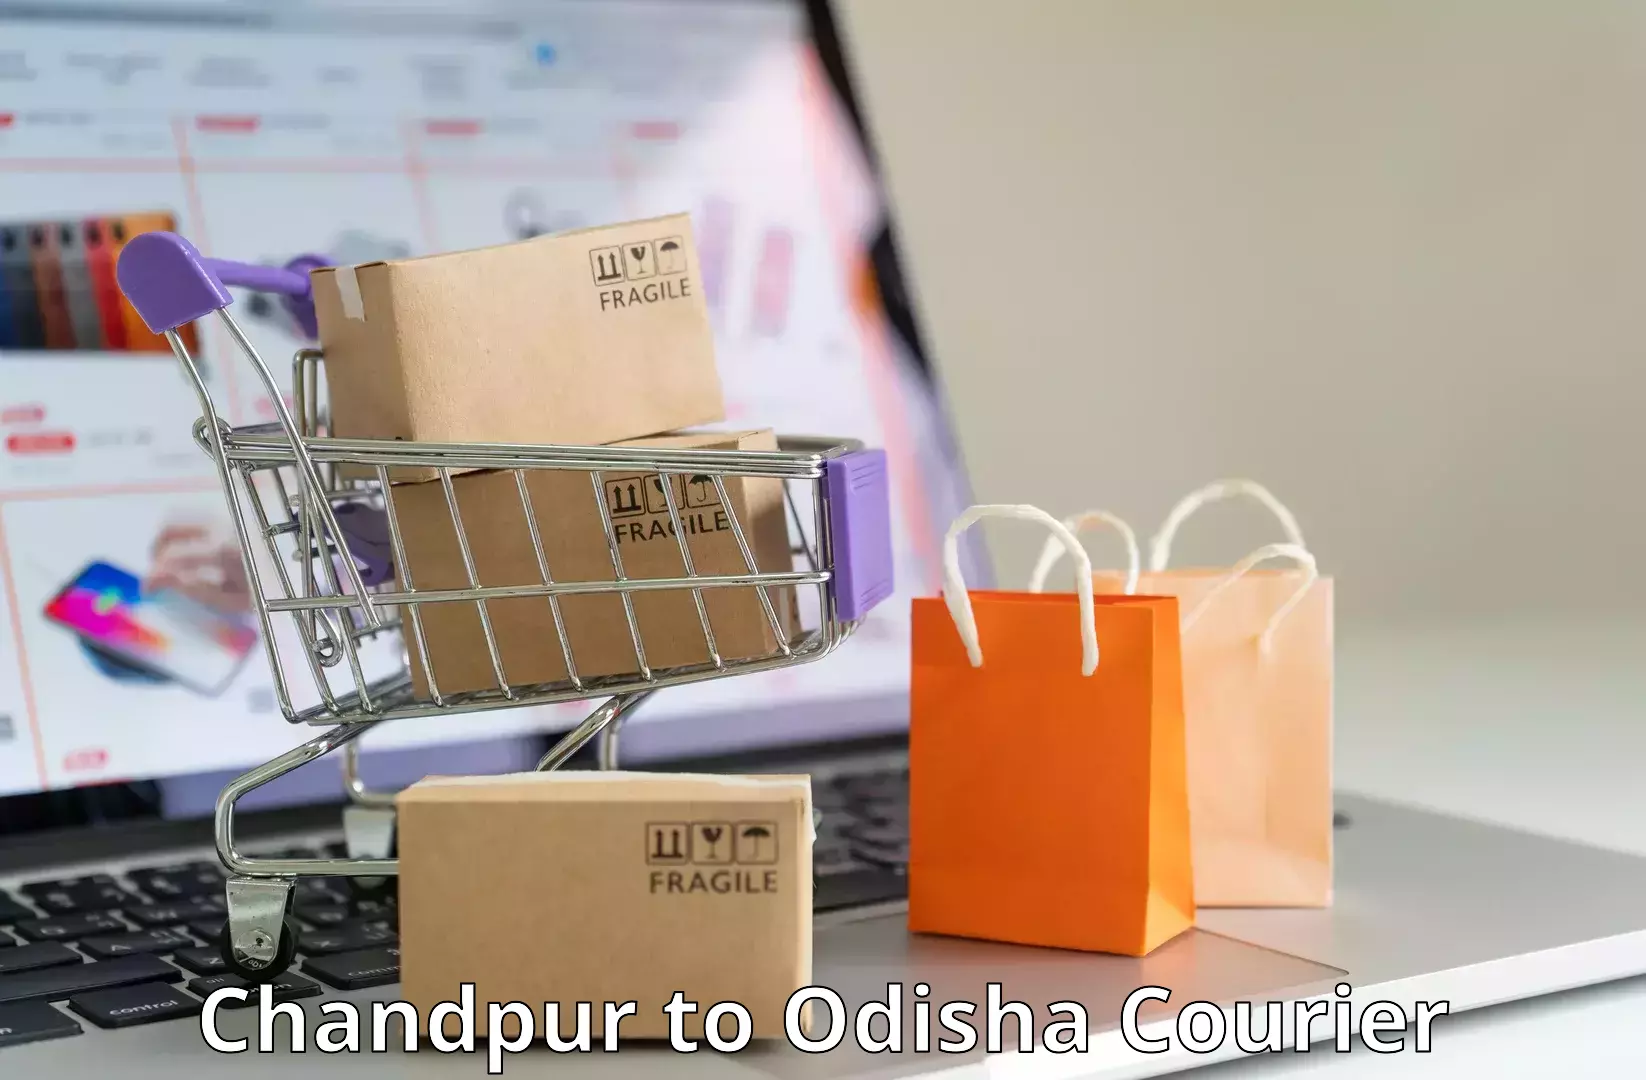 State-of-the-art courier technology Chandpur to Mahakalapada